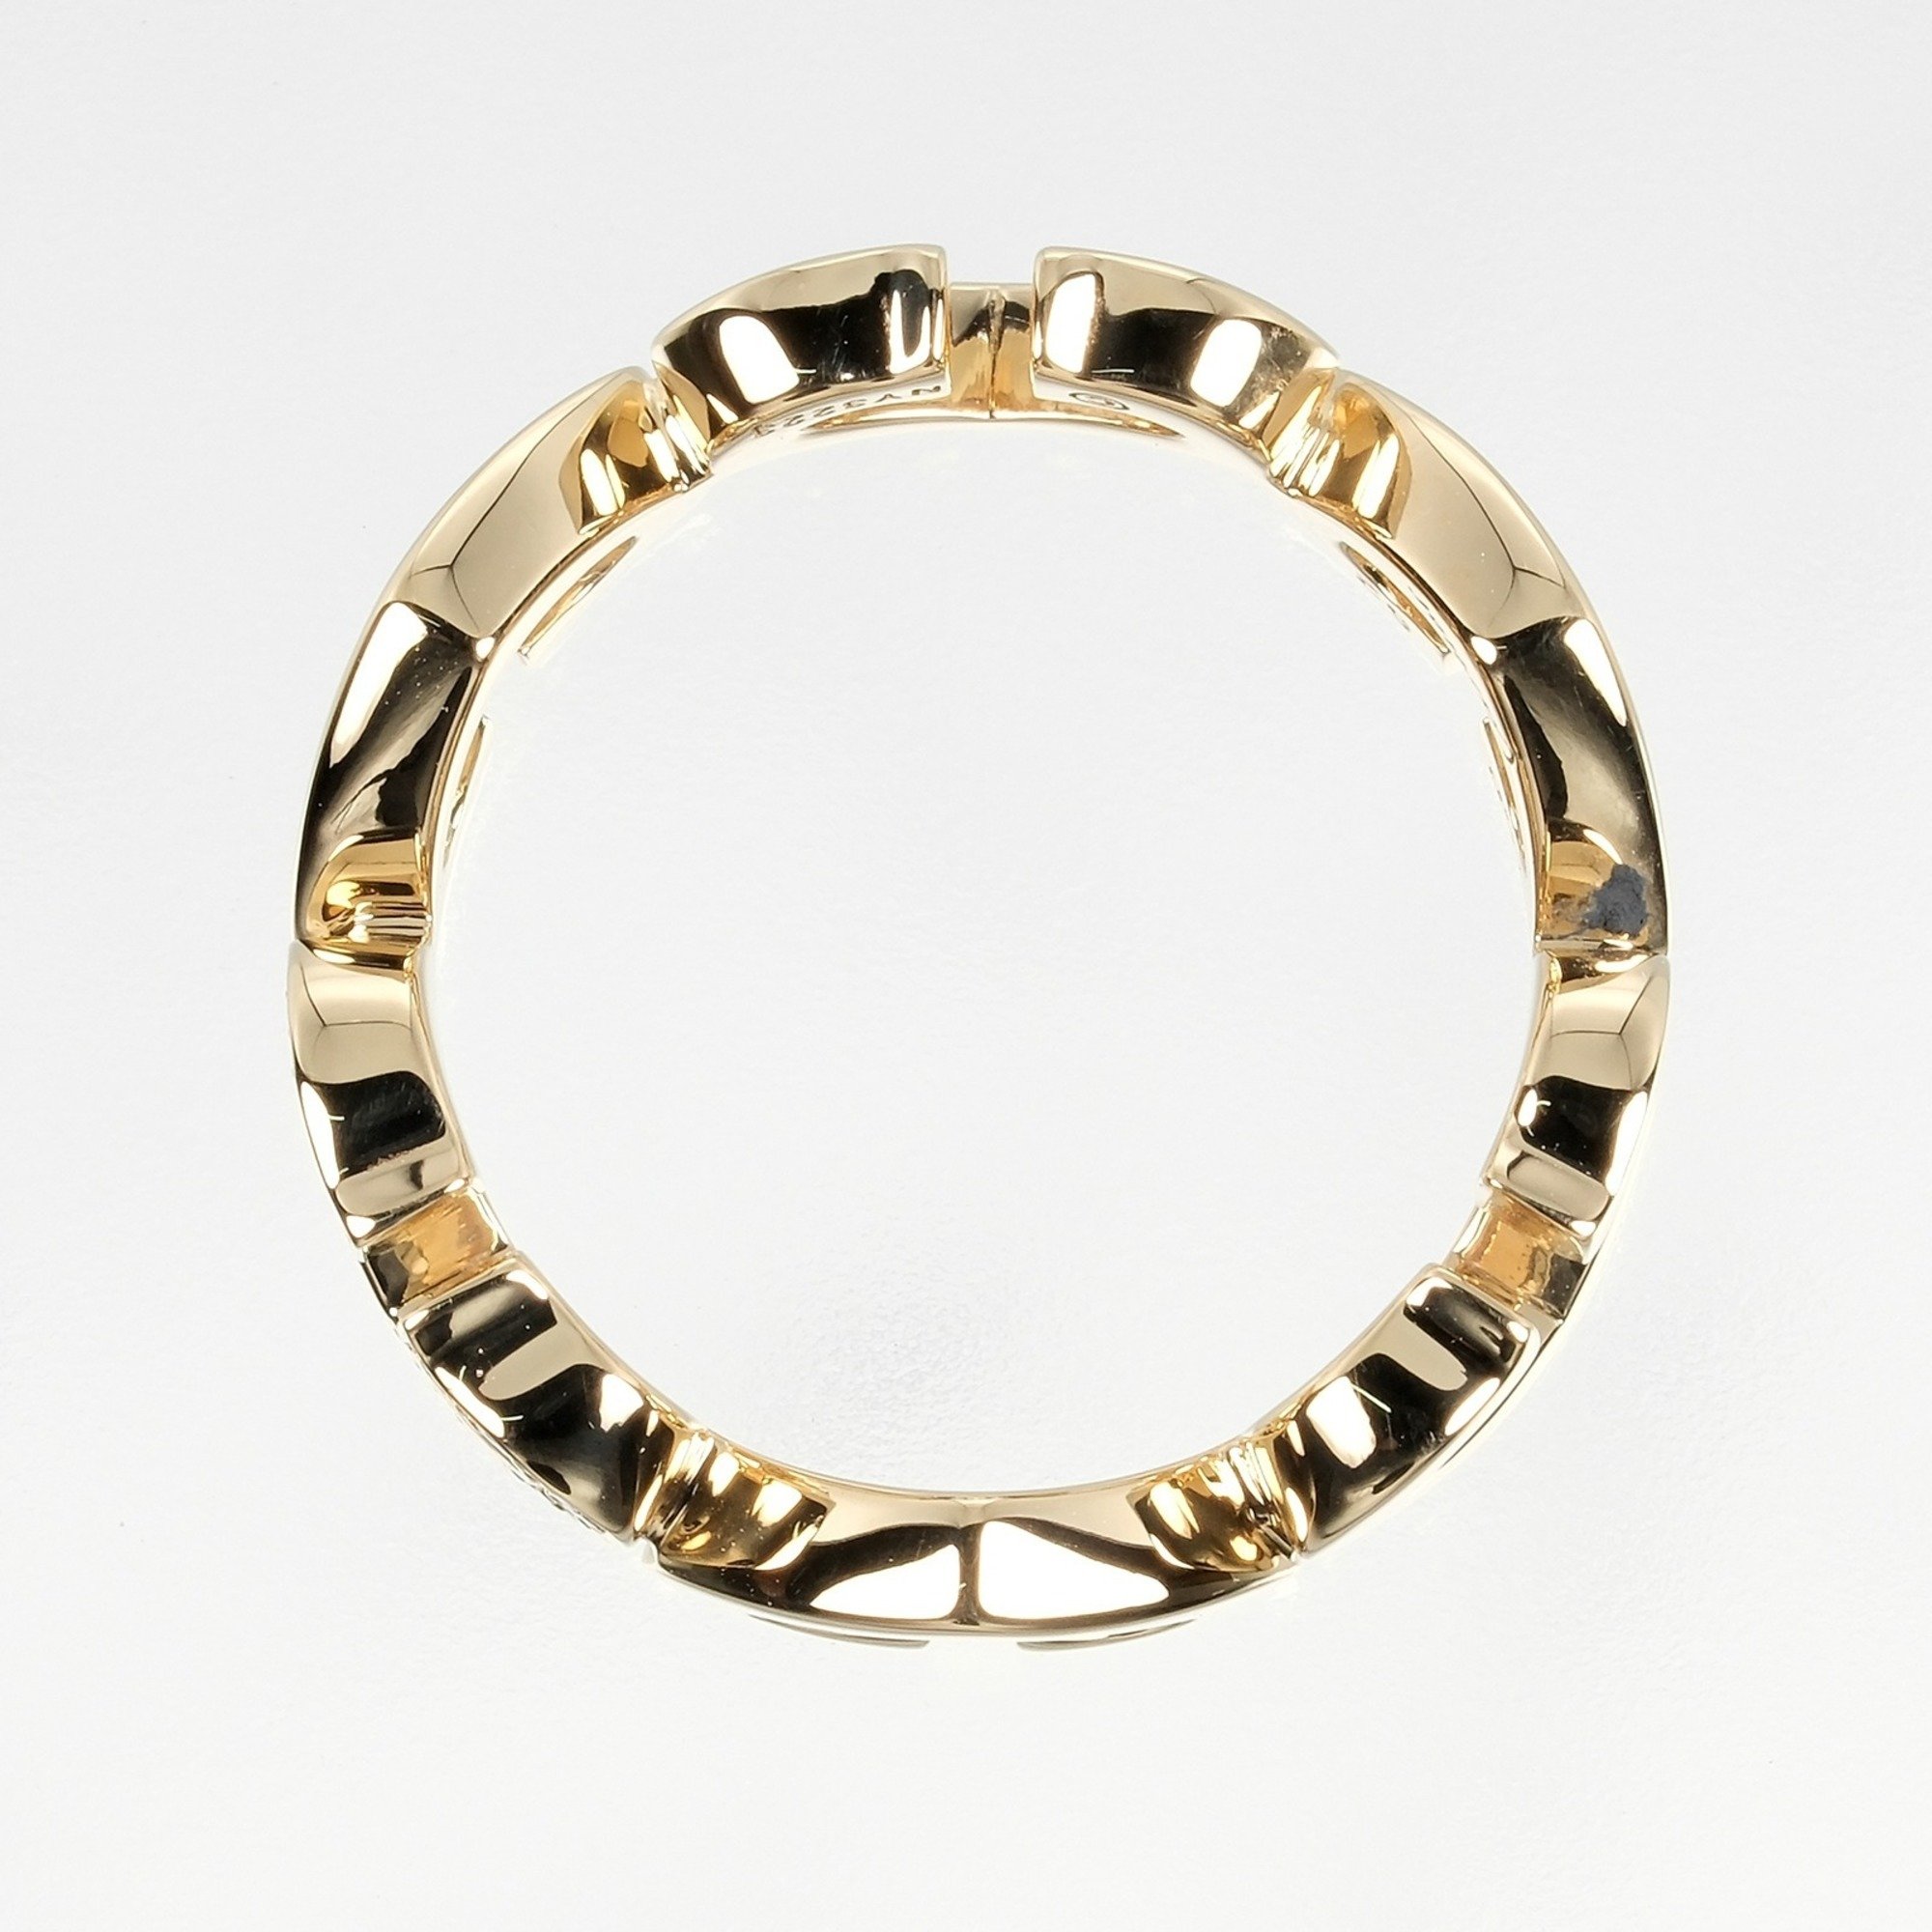 Cartier C Heart Size 11.5 Ring, K18 Yellow Gold, Diamond, Approx. 7.33g